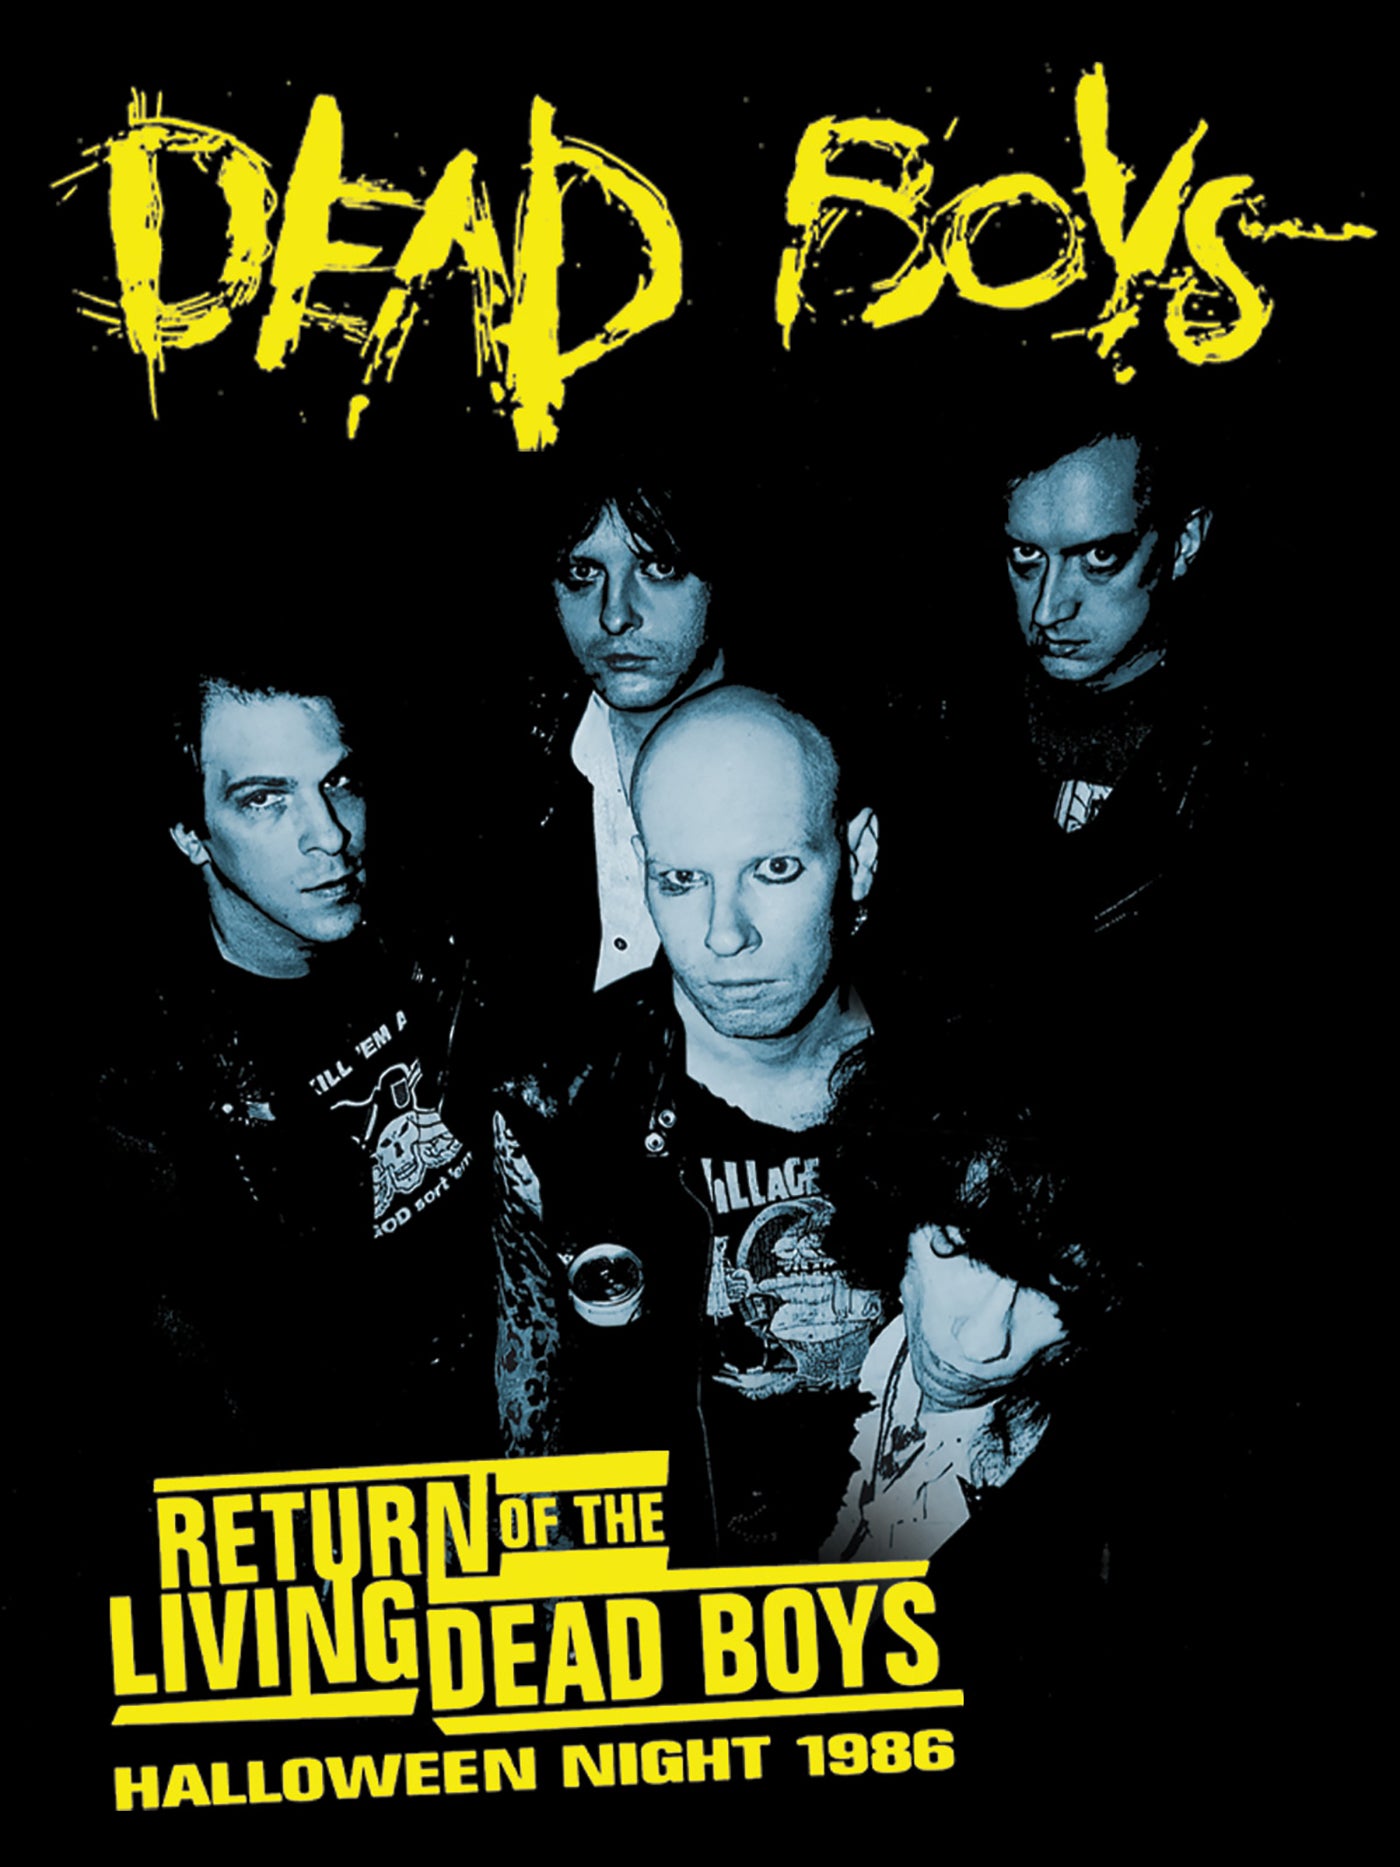 PRE-ORDER Dead Boys: Return of the Living Dead Boys: Halloween Night 1986 - Blu-ray Region Free